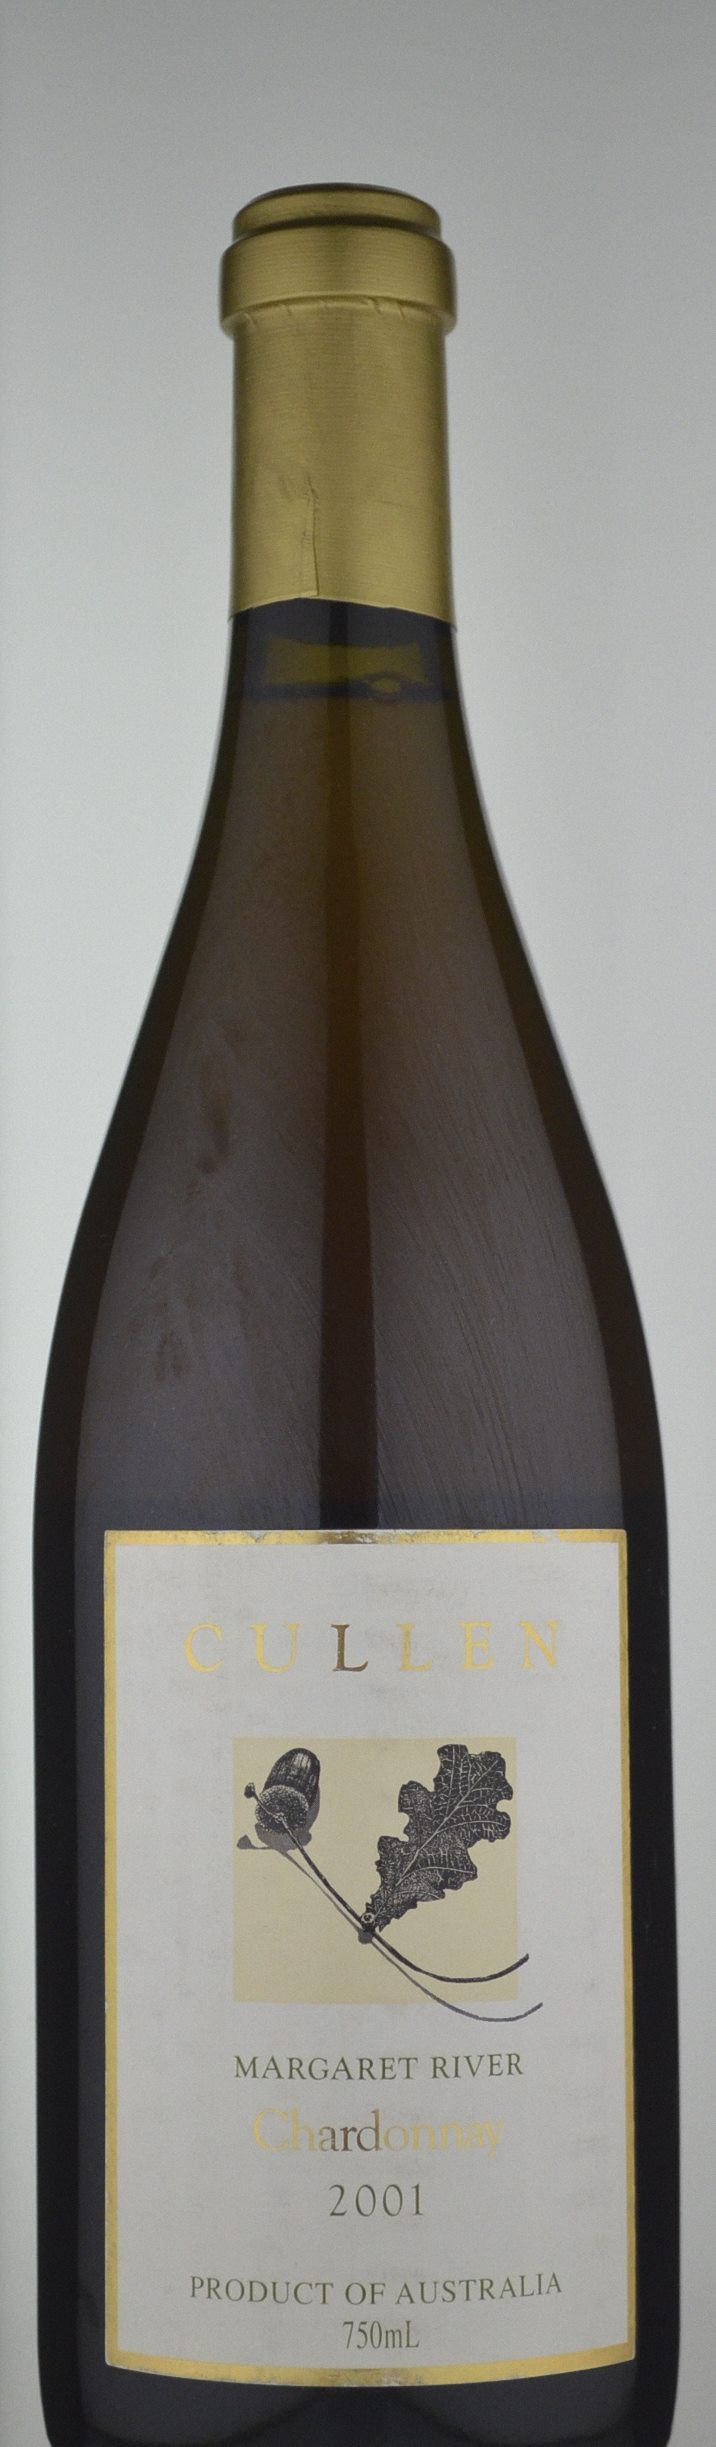 Cullen Wines Chardonnay 2001